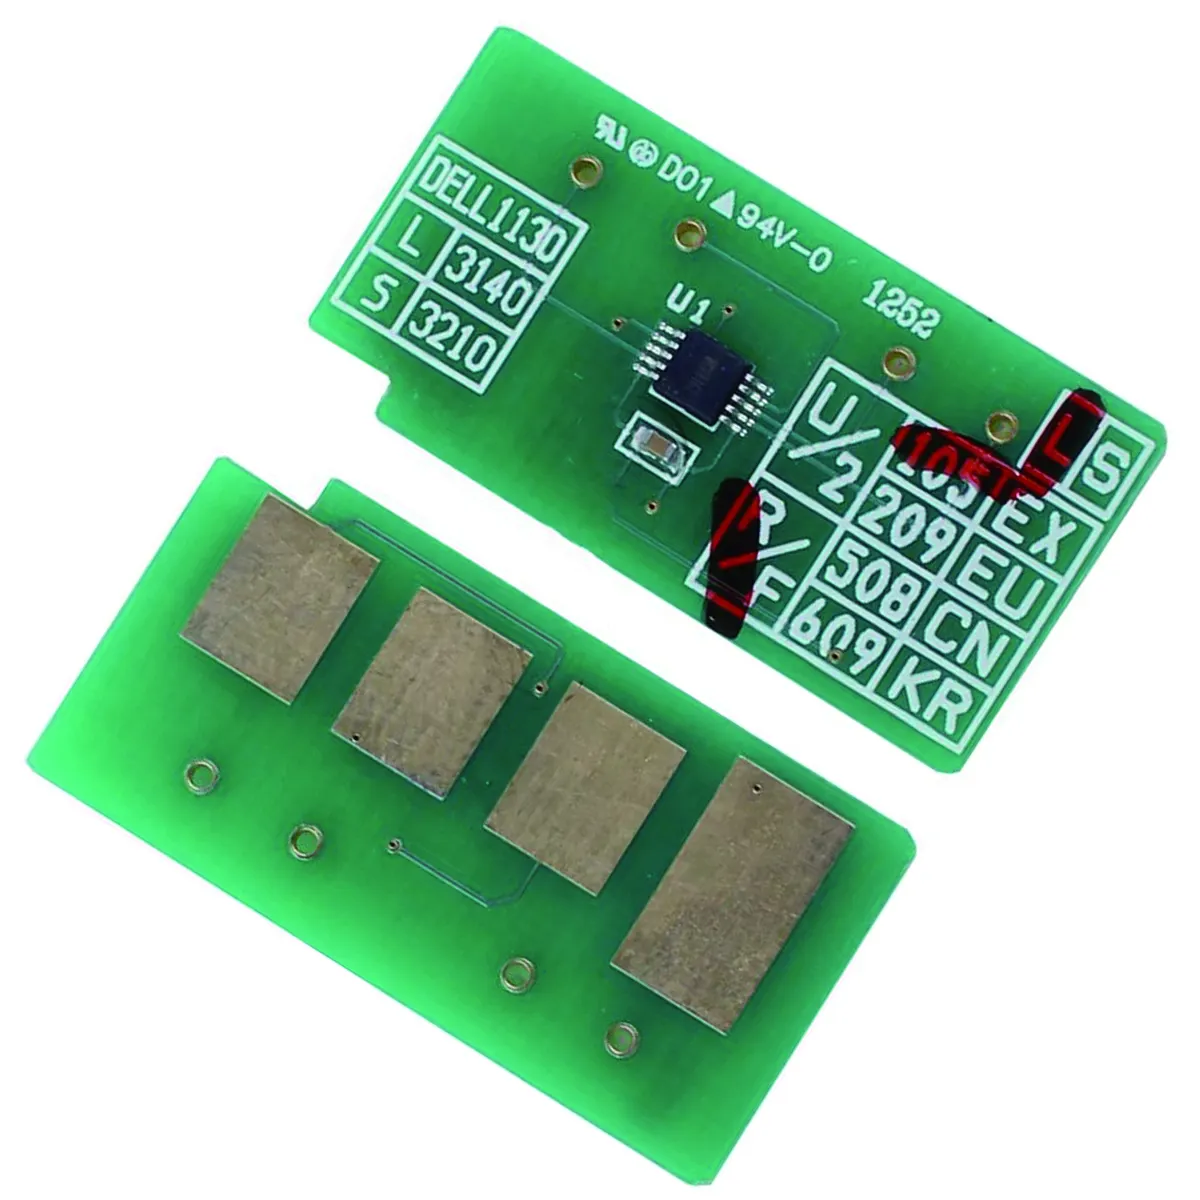 Cartucho láser de chips para Samsung MLT204U/ELS chips Cyan Imaging Unit Chip/para Samsung Microfiche Printer